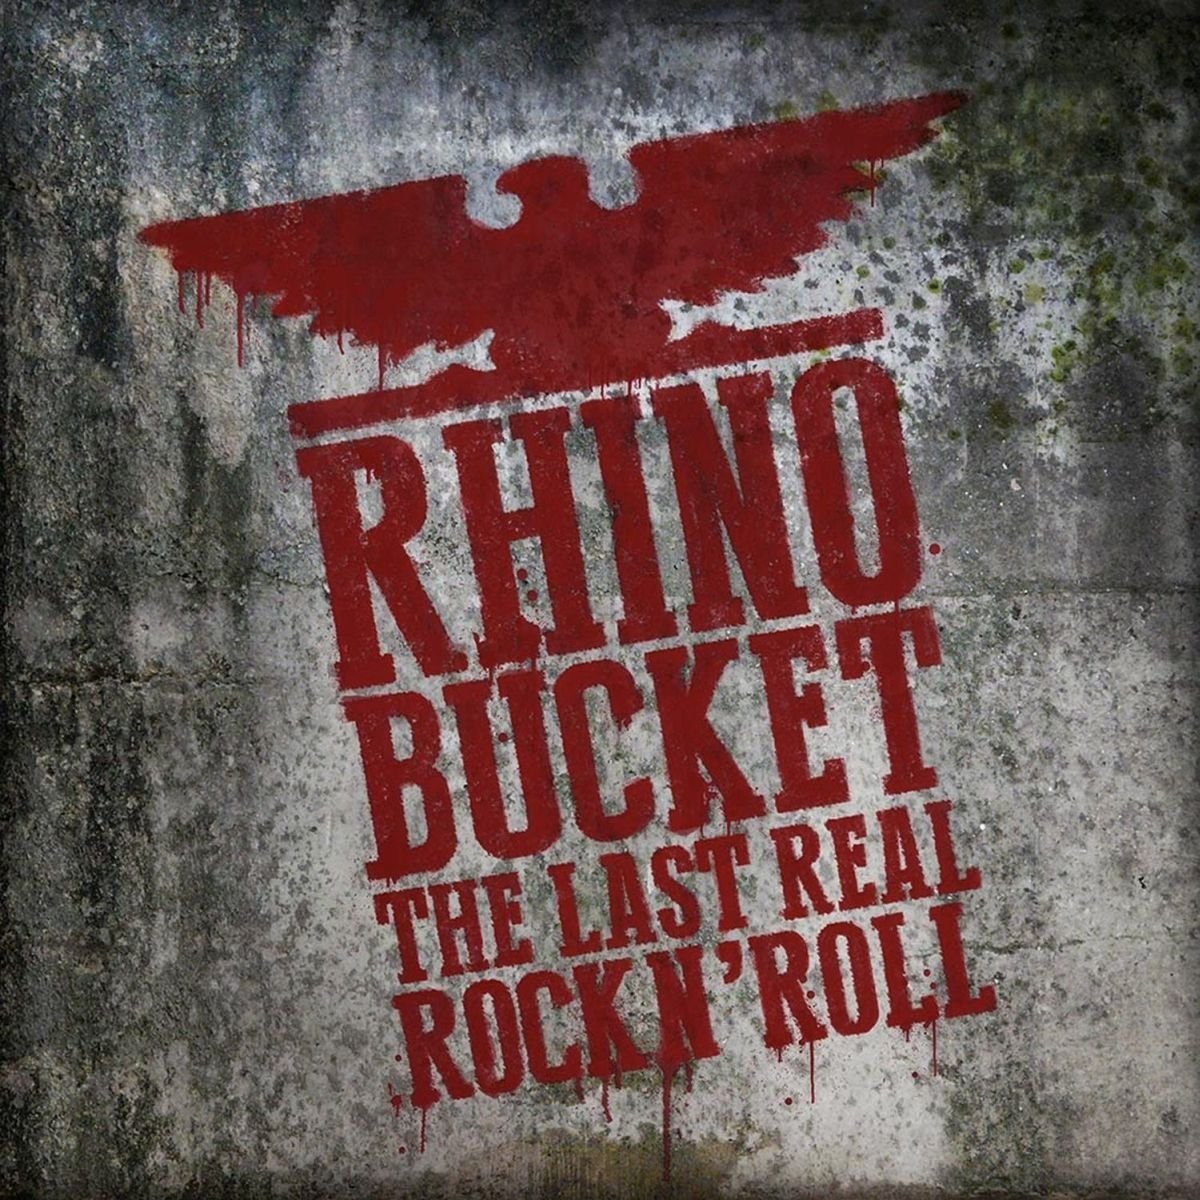 Rhinobucket : The Last Rock N' Roll. Album Cover